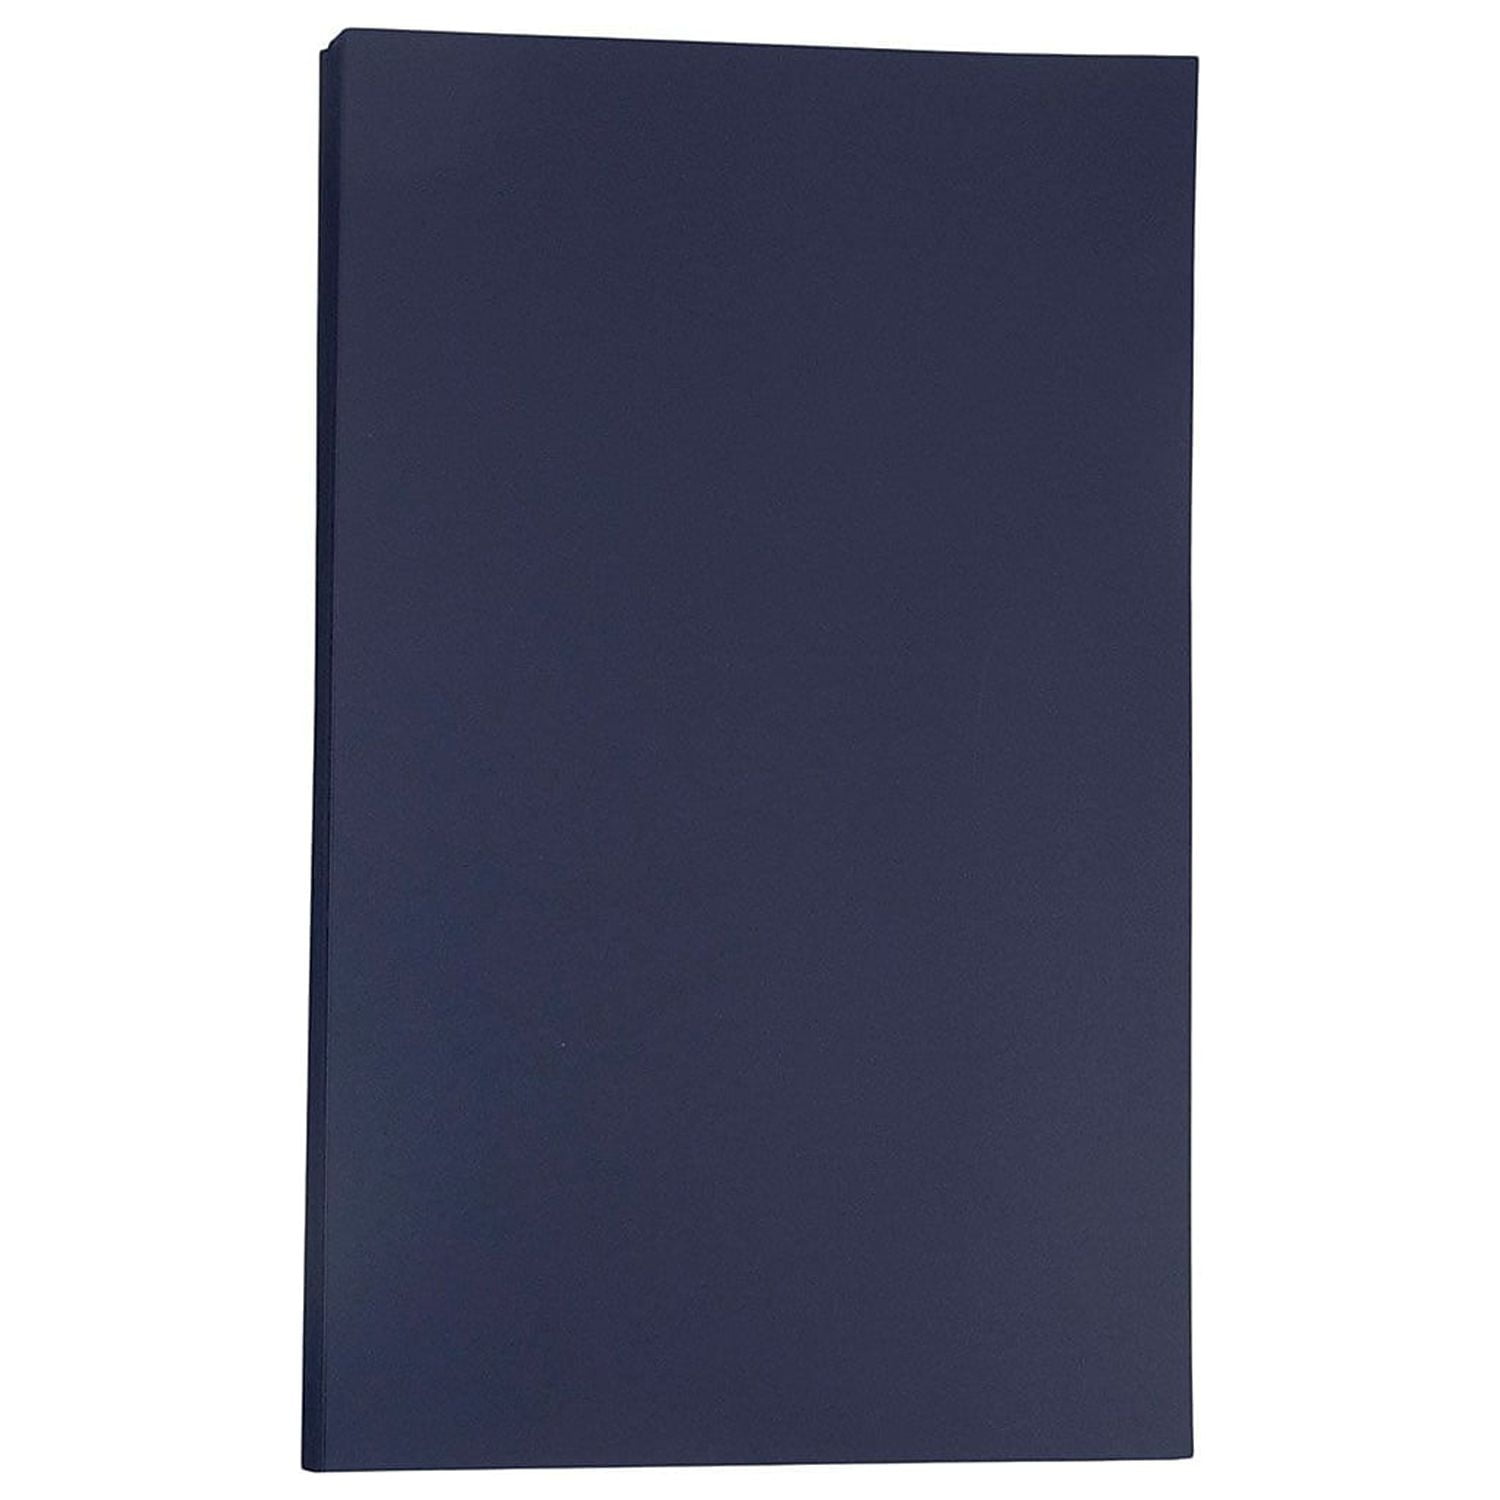 Journaling Pens in Blue and Black for Discount Cardstock paper -  CutCardStock